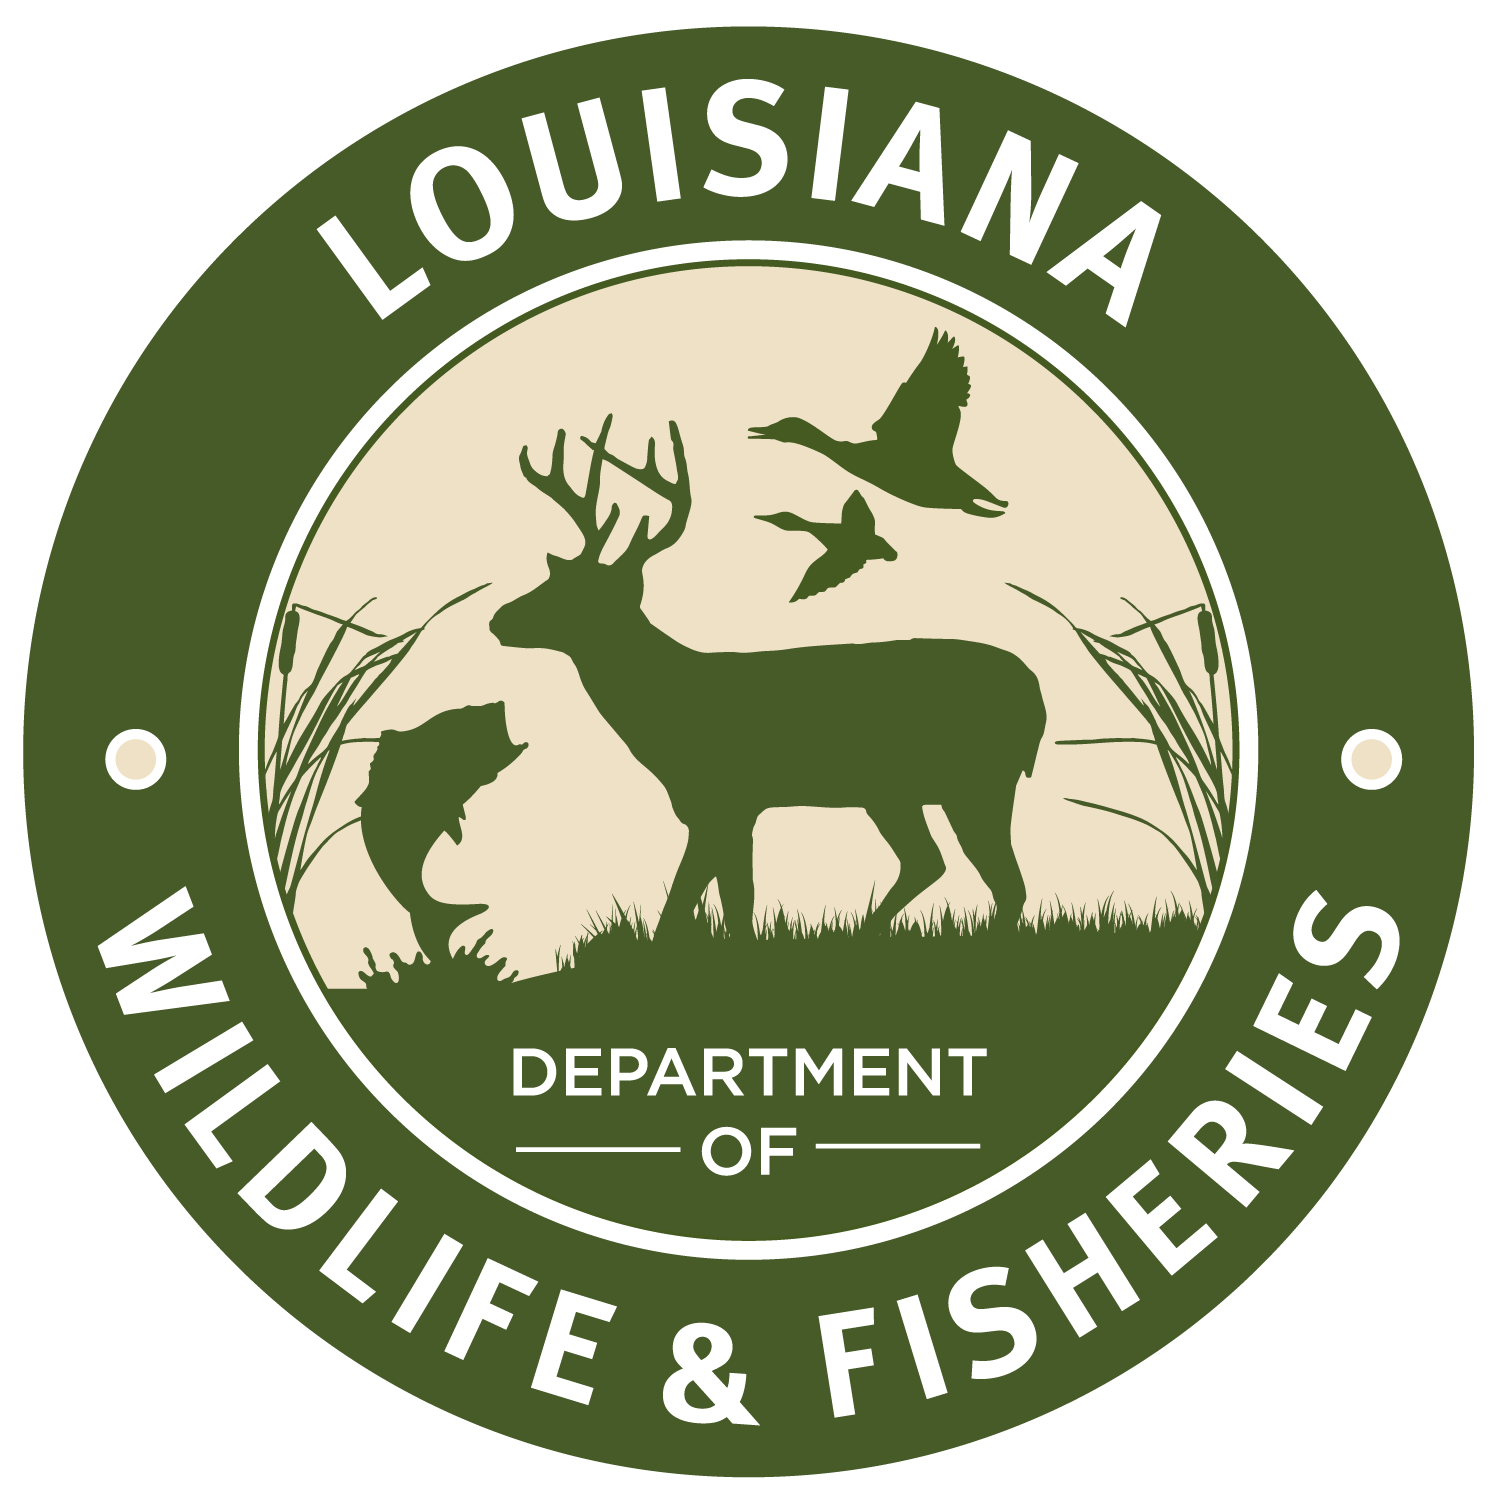 Louisiana Department of Wildlife & Fisheries logo